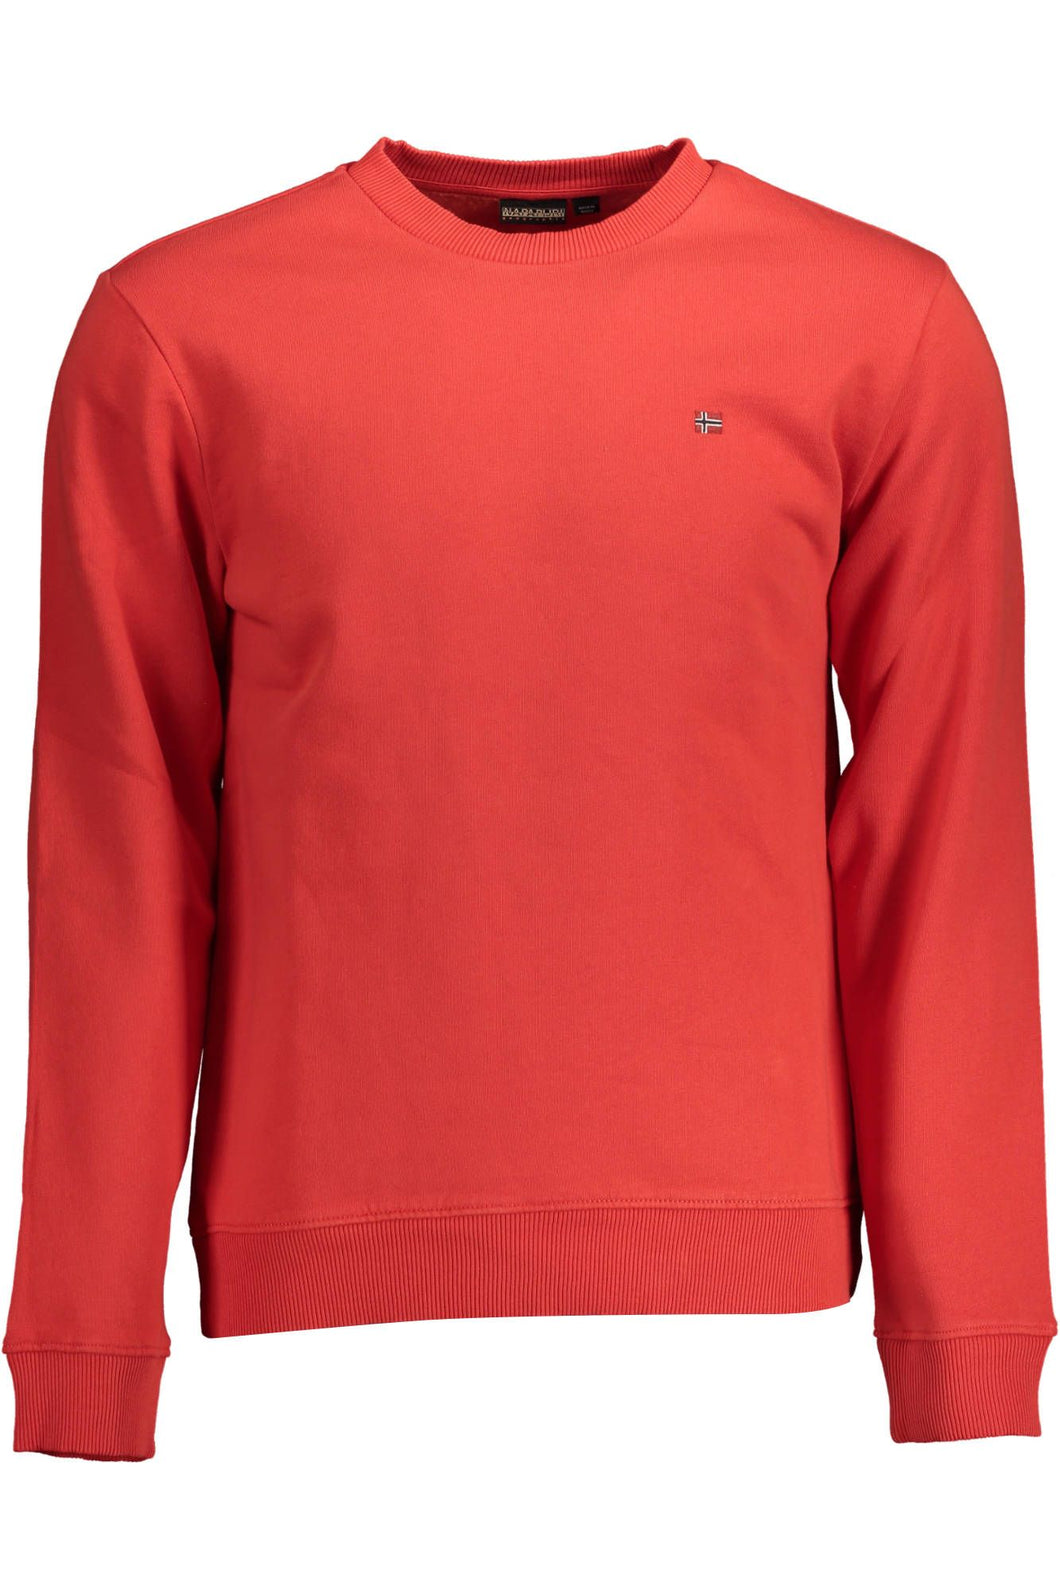 Napapijri Red Cotton Sweater